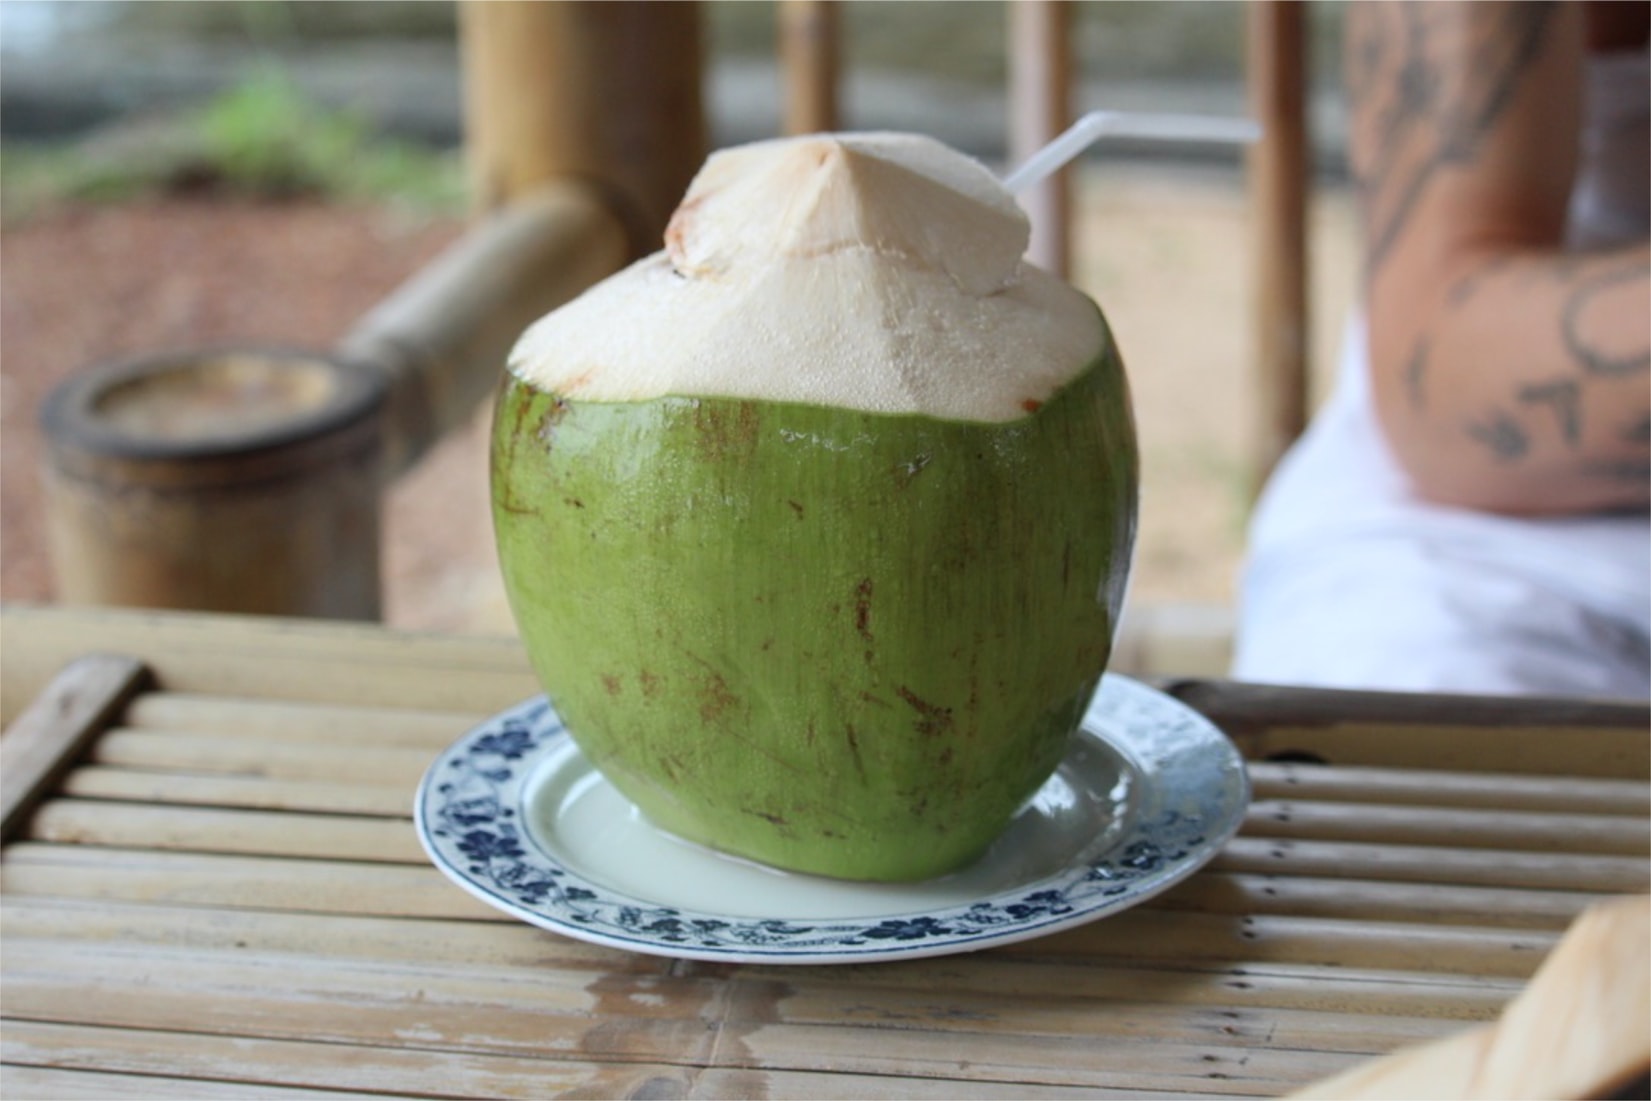 is coconut milk gluten free?